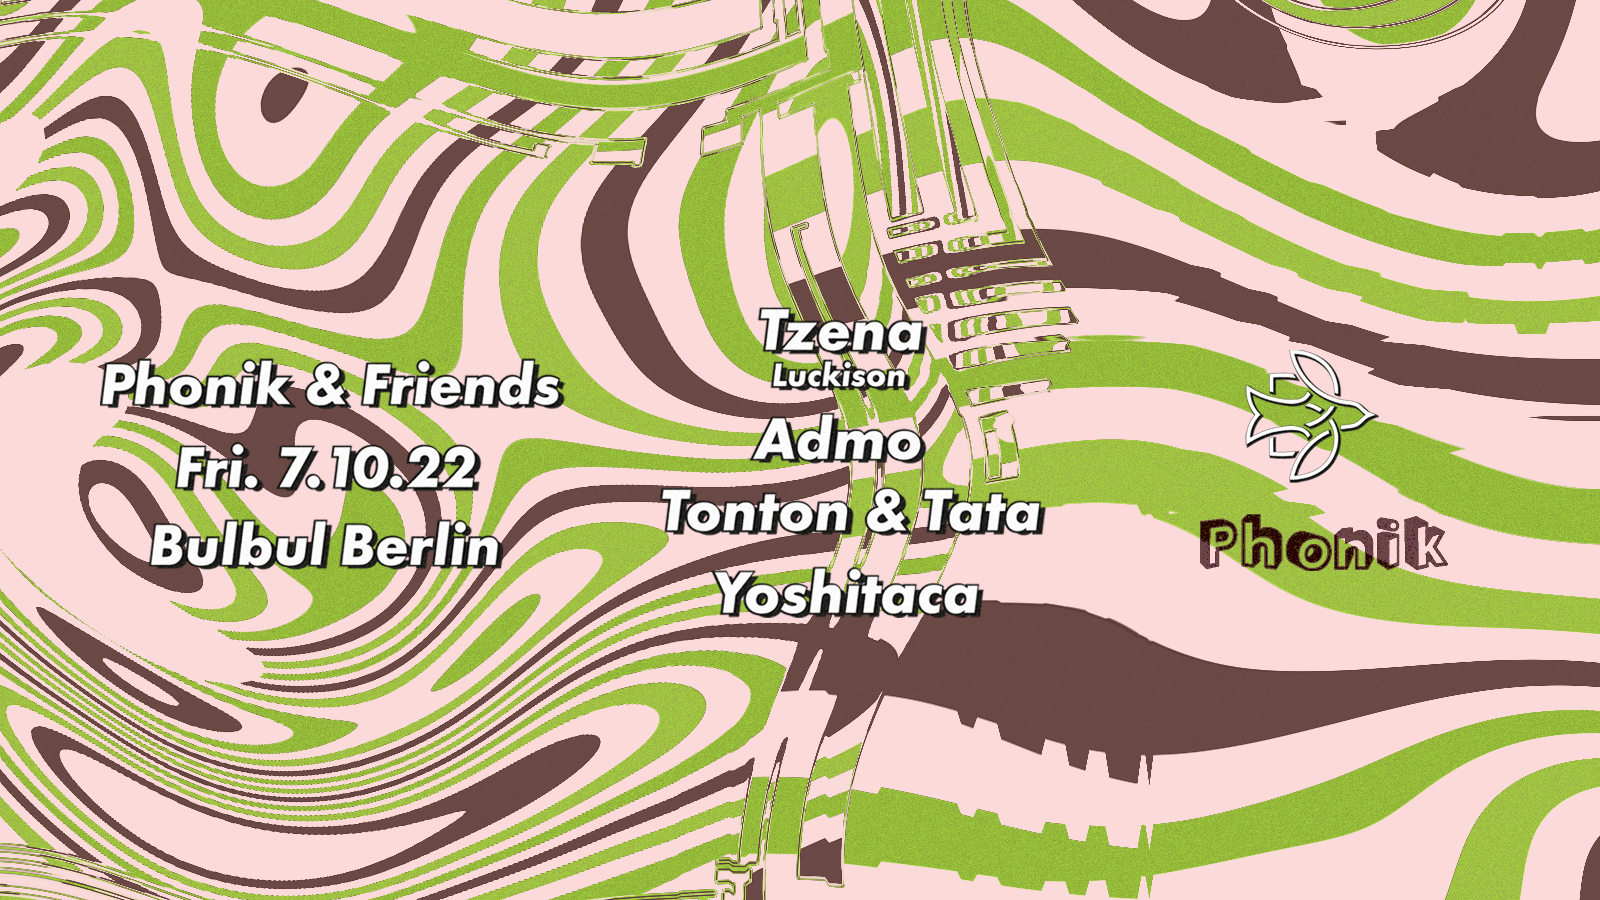 Phonik & Friends: Tzena, Admo, Tonton & Tata, Yoshitaca  - Flyer front